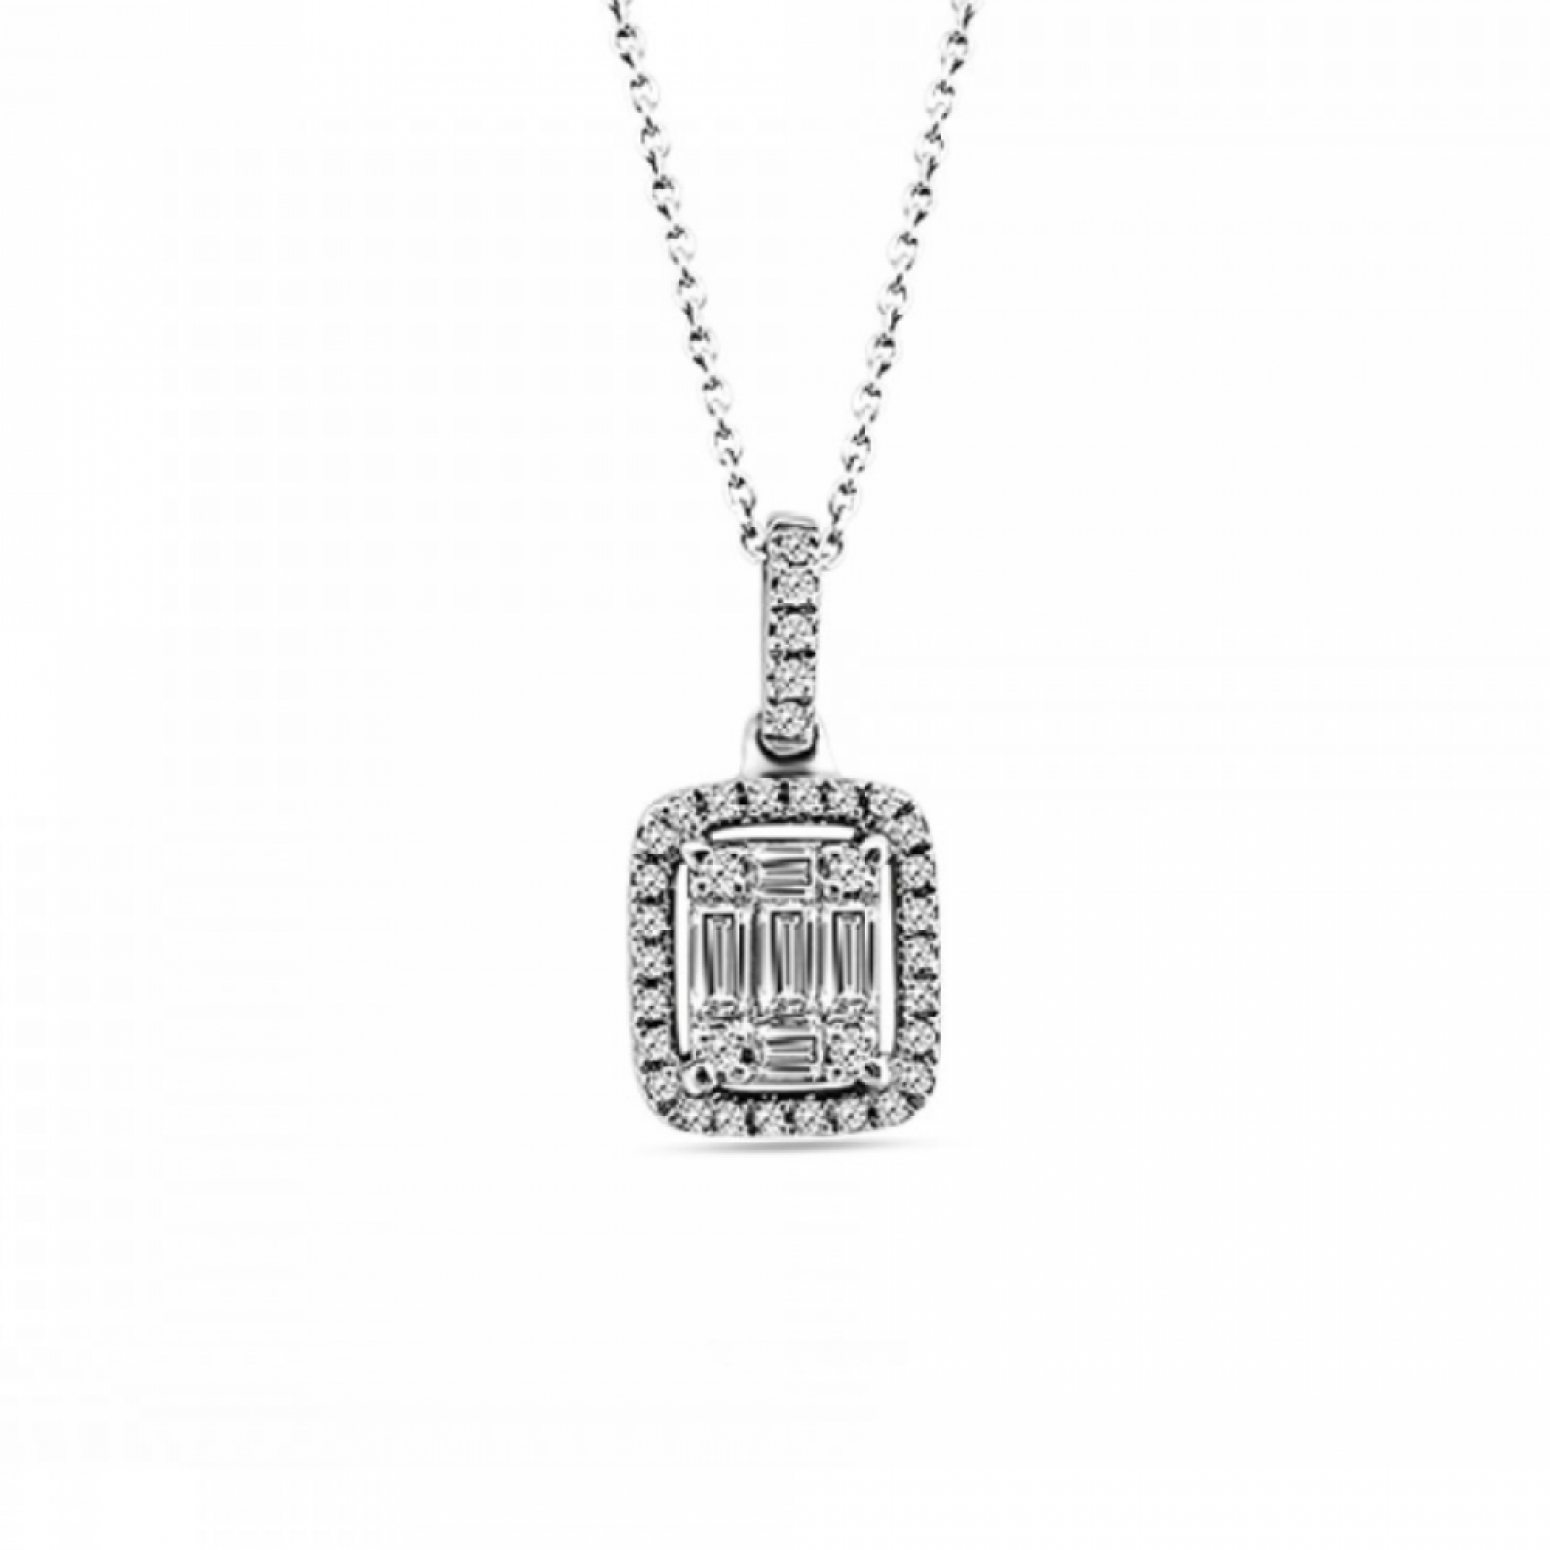 Multistone necklace 18K white gold with diamonds 0.23ct, VS1, F from IGL, me2177 NECKLACES Κοσμηματα - chrilia.gr